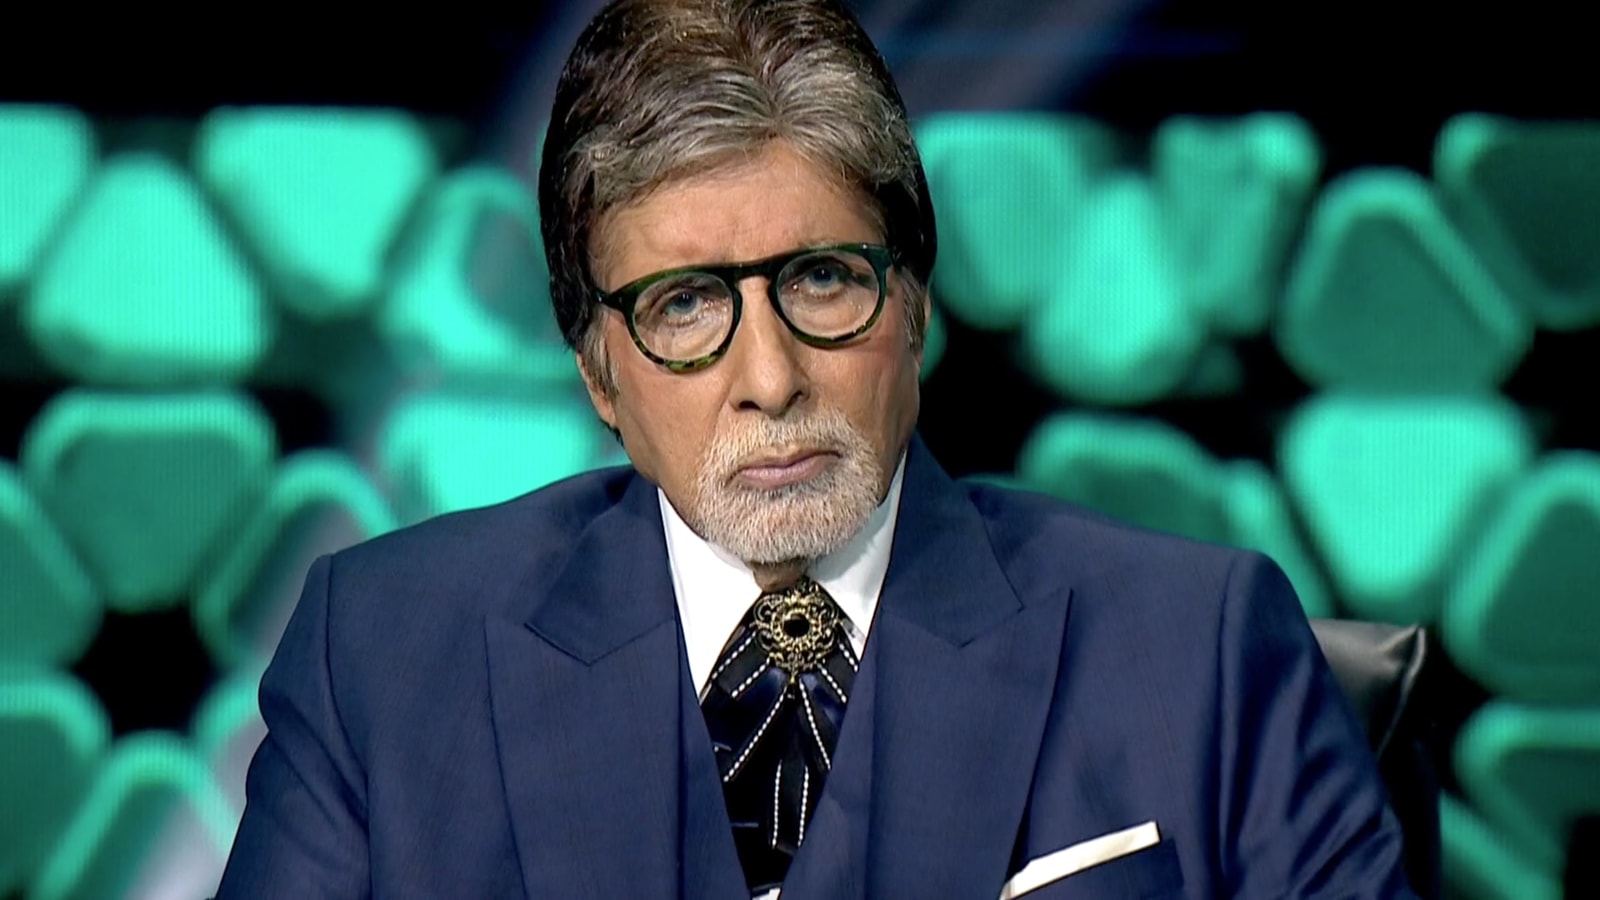 Kaun Banega Crorepati 13: Amitabh Bachchan reveals why his father  'deliberately' chose Bachchan as surname - Hindustan Times